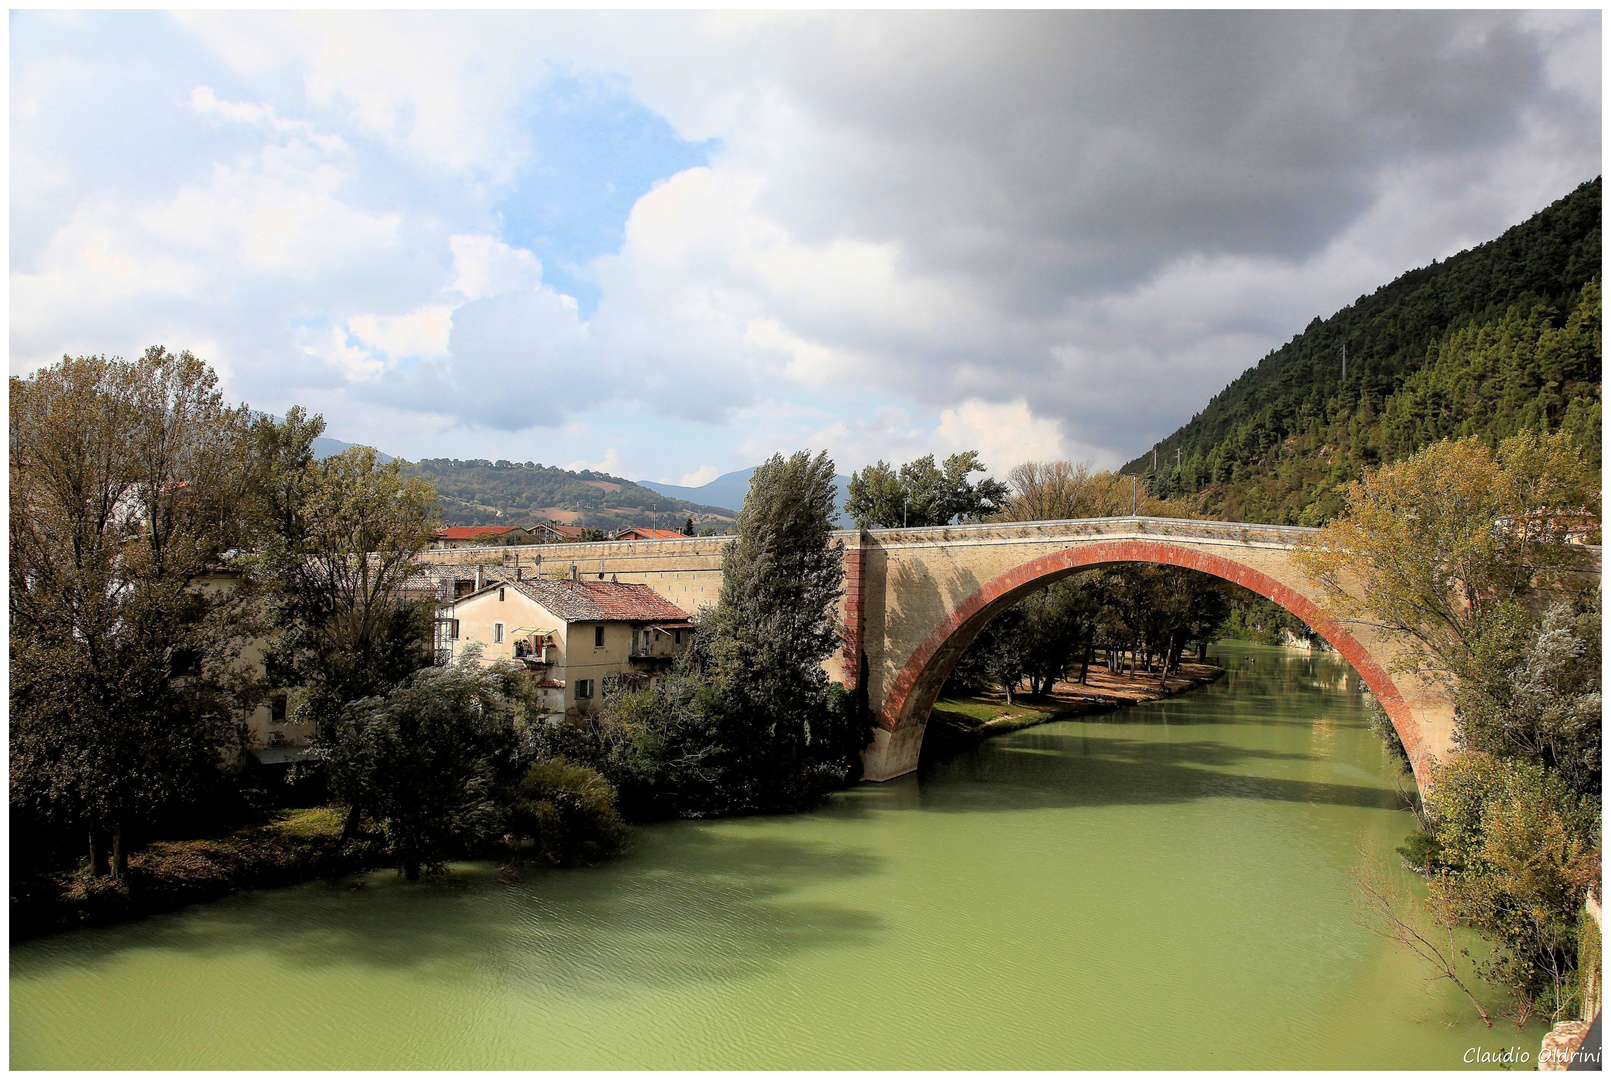 Fossombrone bridge over the river Metauro